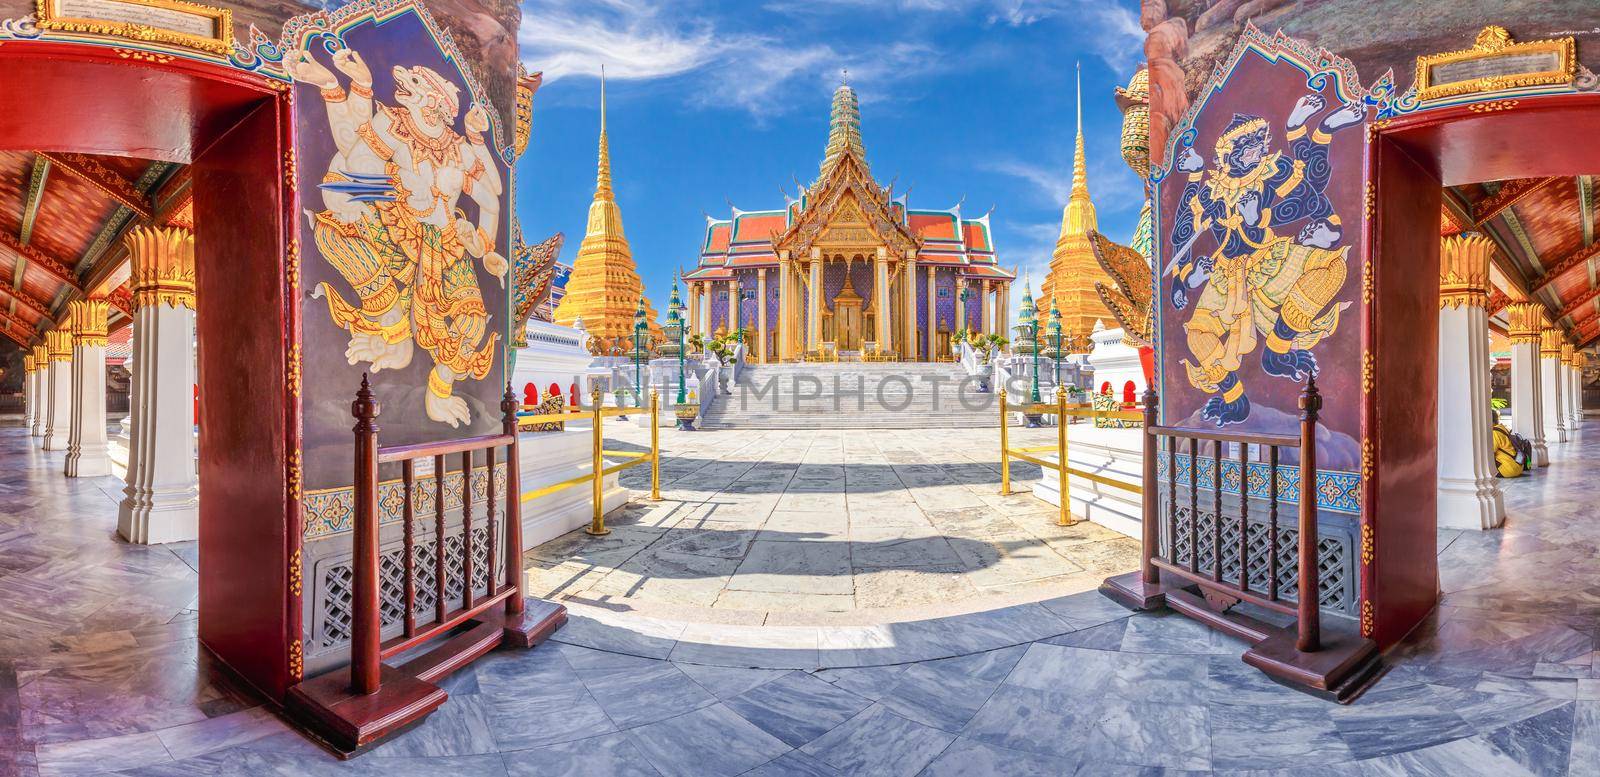 Wat Phra Kaew, Temple of the Emerald Buddha with blue sky Bangkok, Asia Thailand